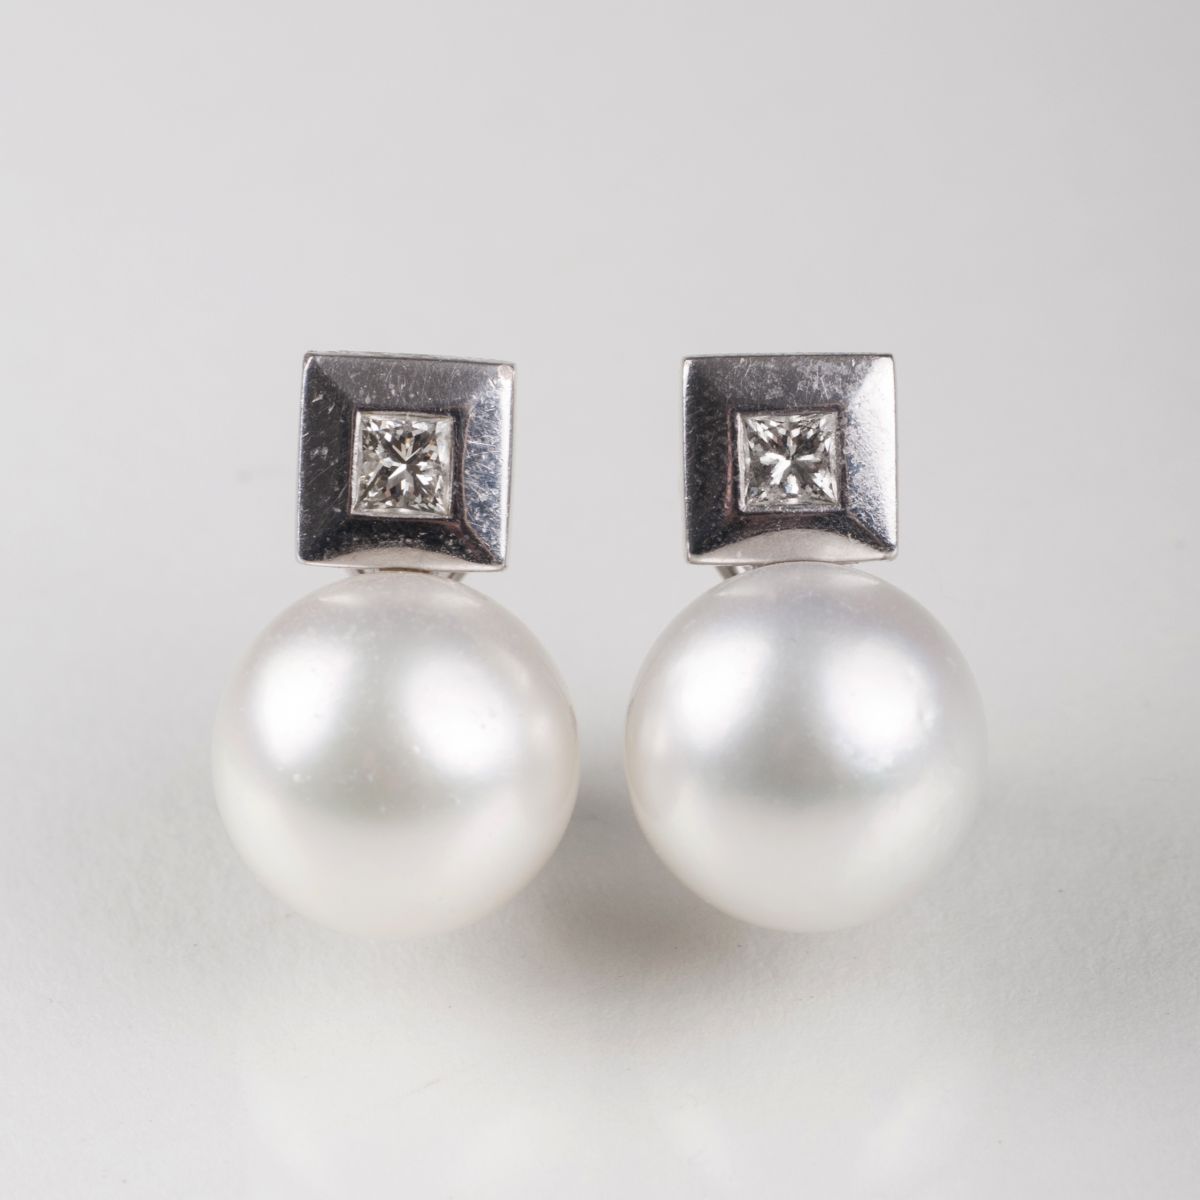 A pair of Southsea cultured pearl diamond earrings